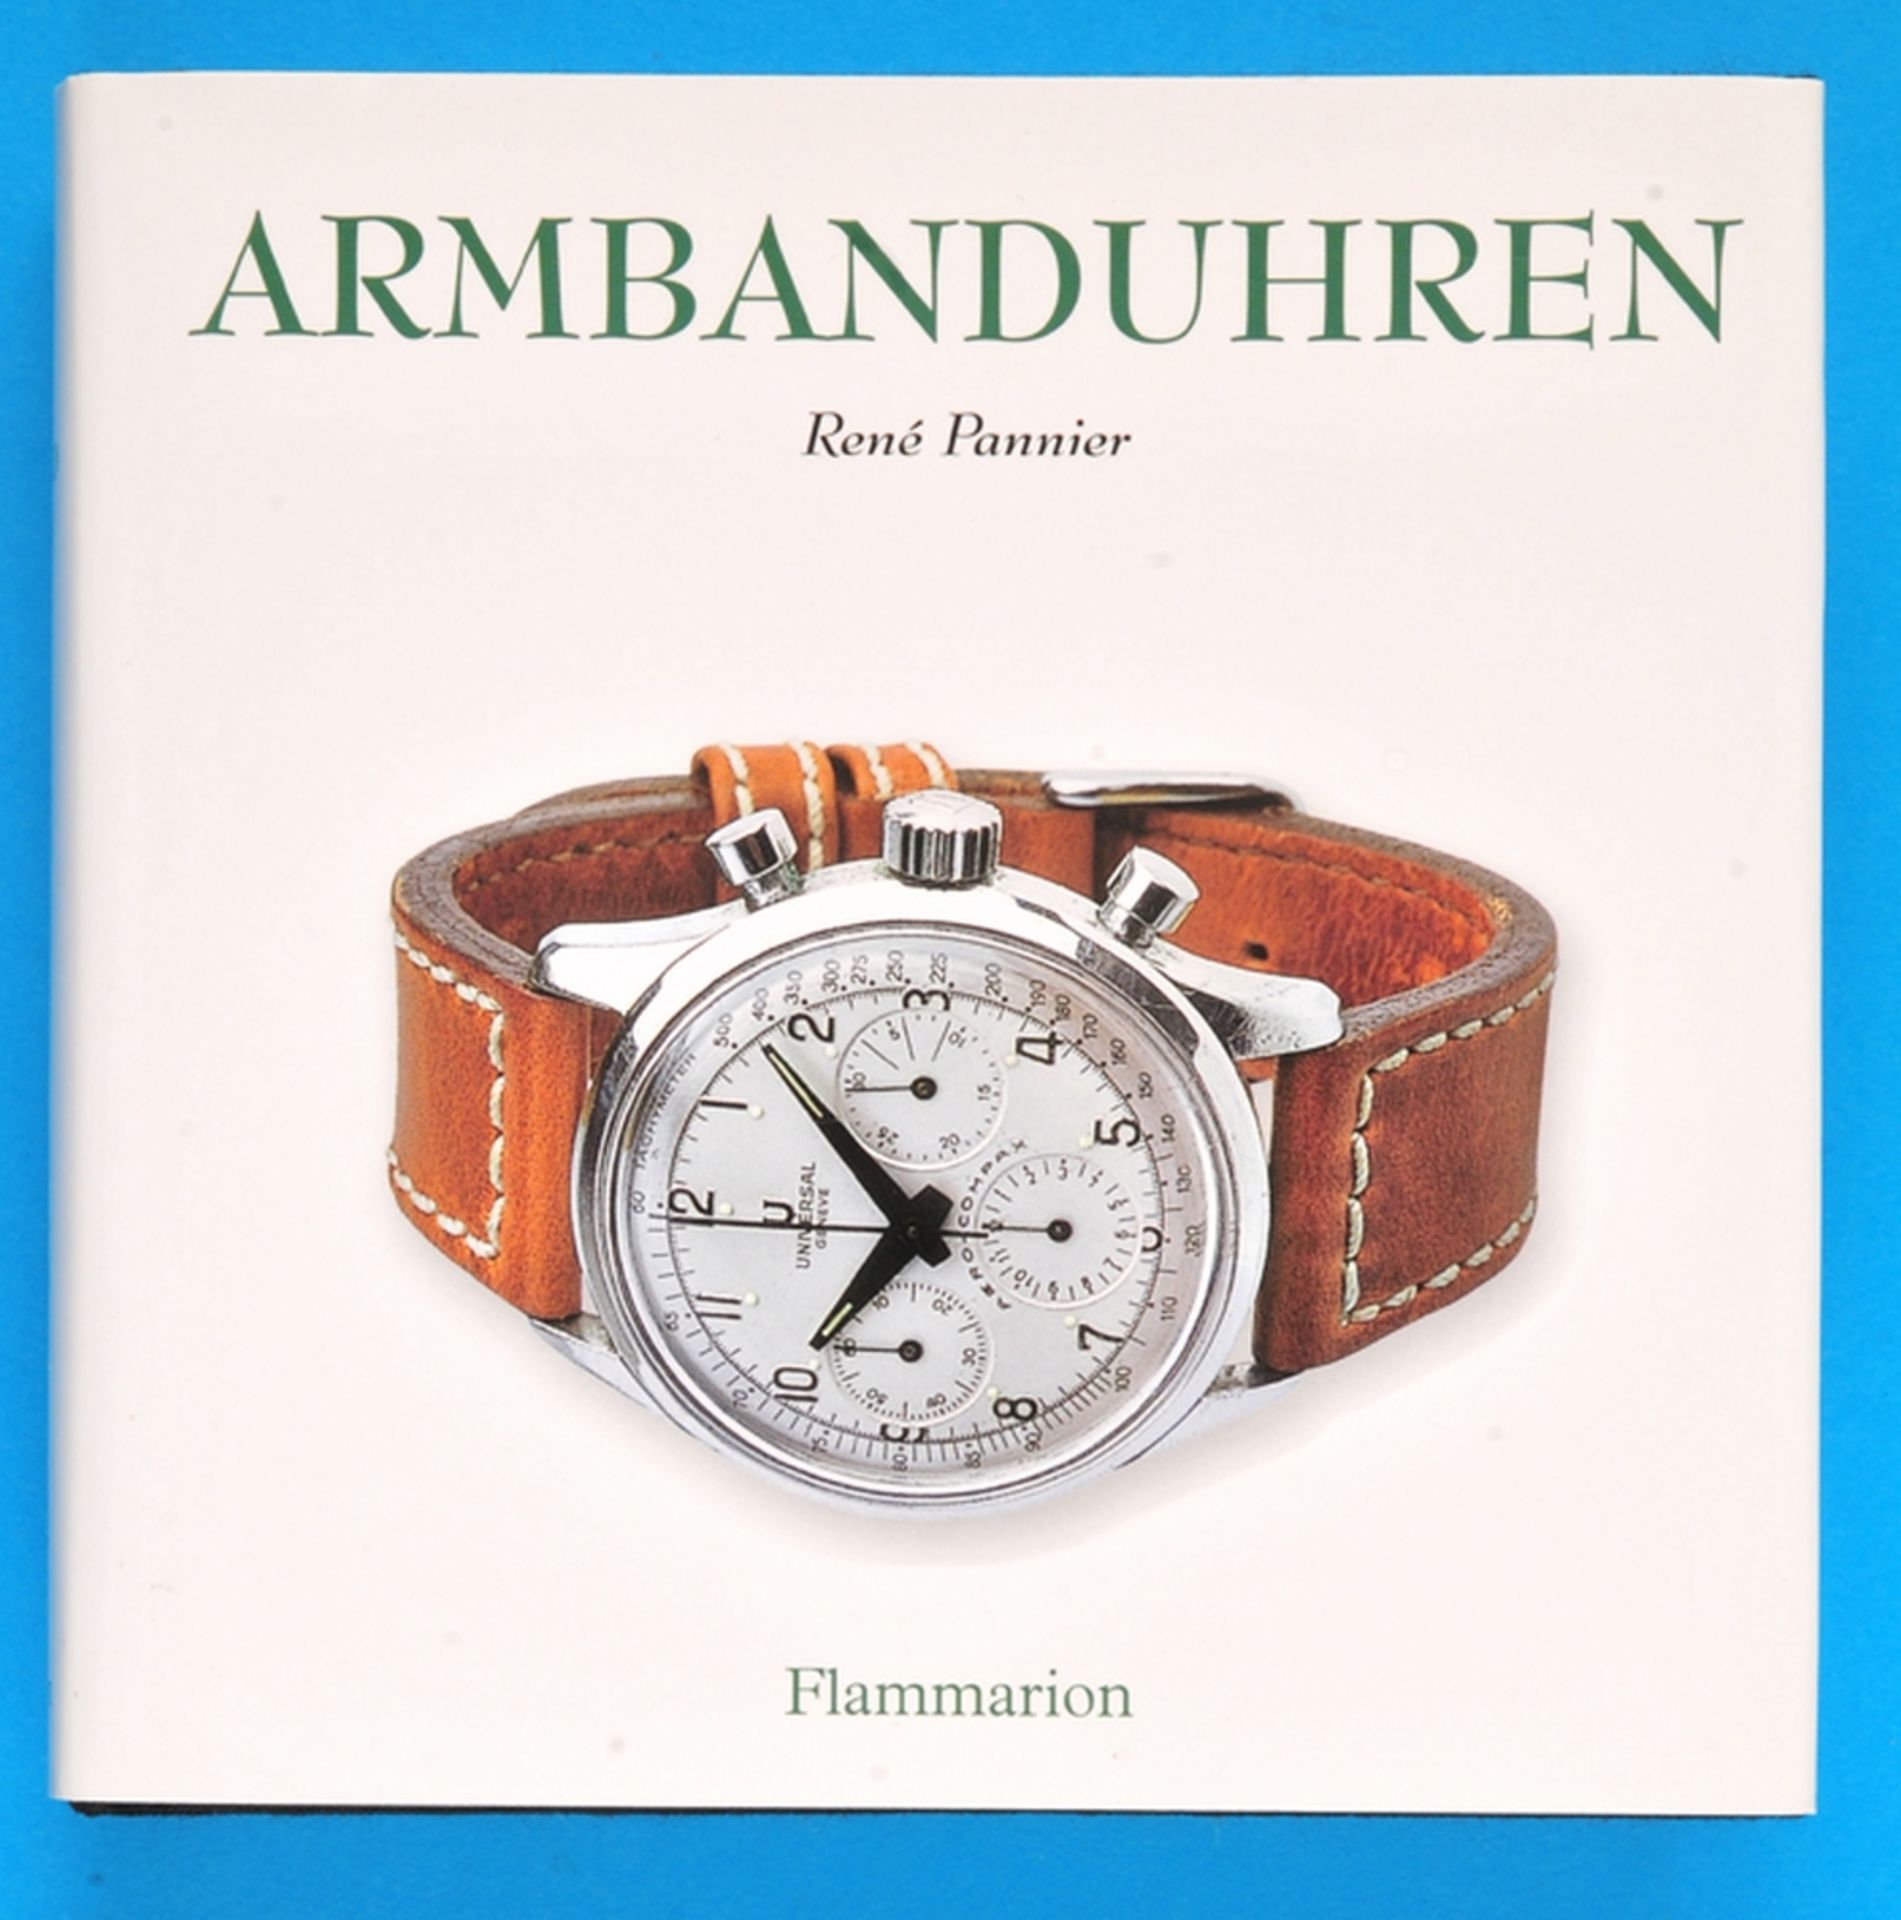 René Pannier, Armbanduhren, Meisterwerke der Präzision, Kunstwerke des Designs. Fast 400 Armbanduhre